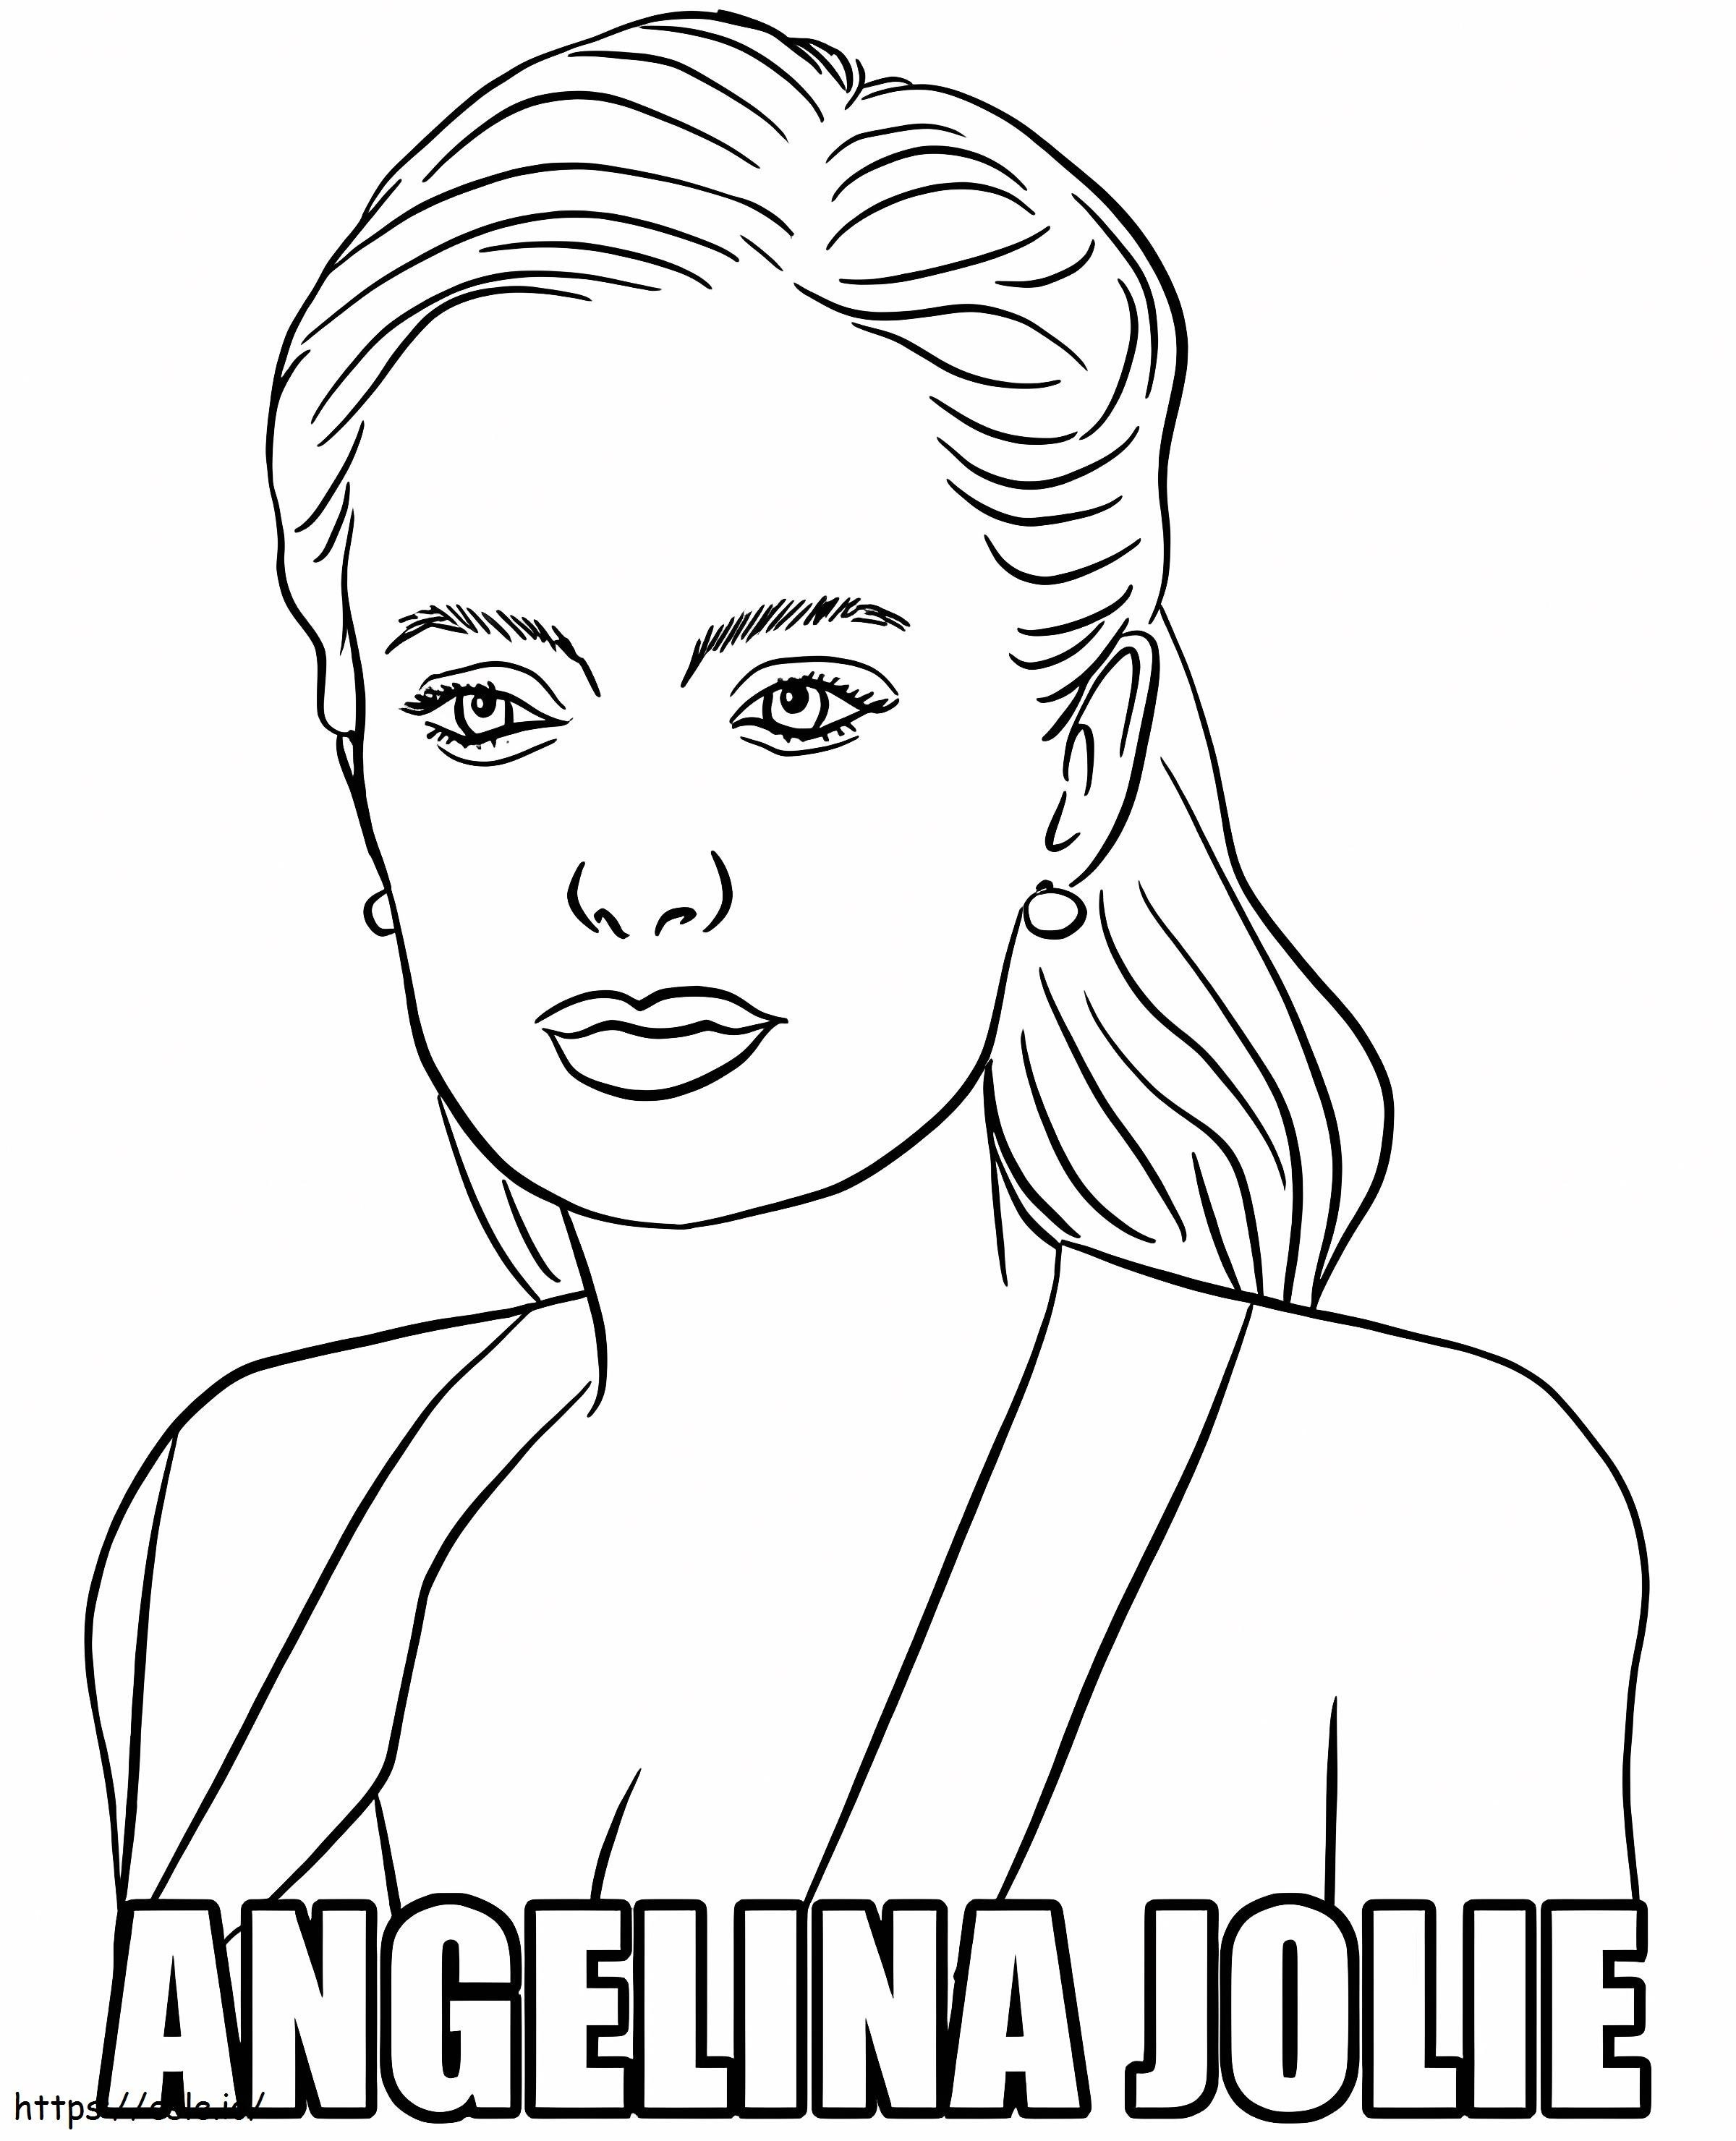 Free Printable Angelina Jolie coloring page